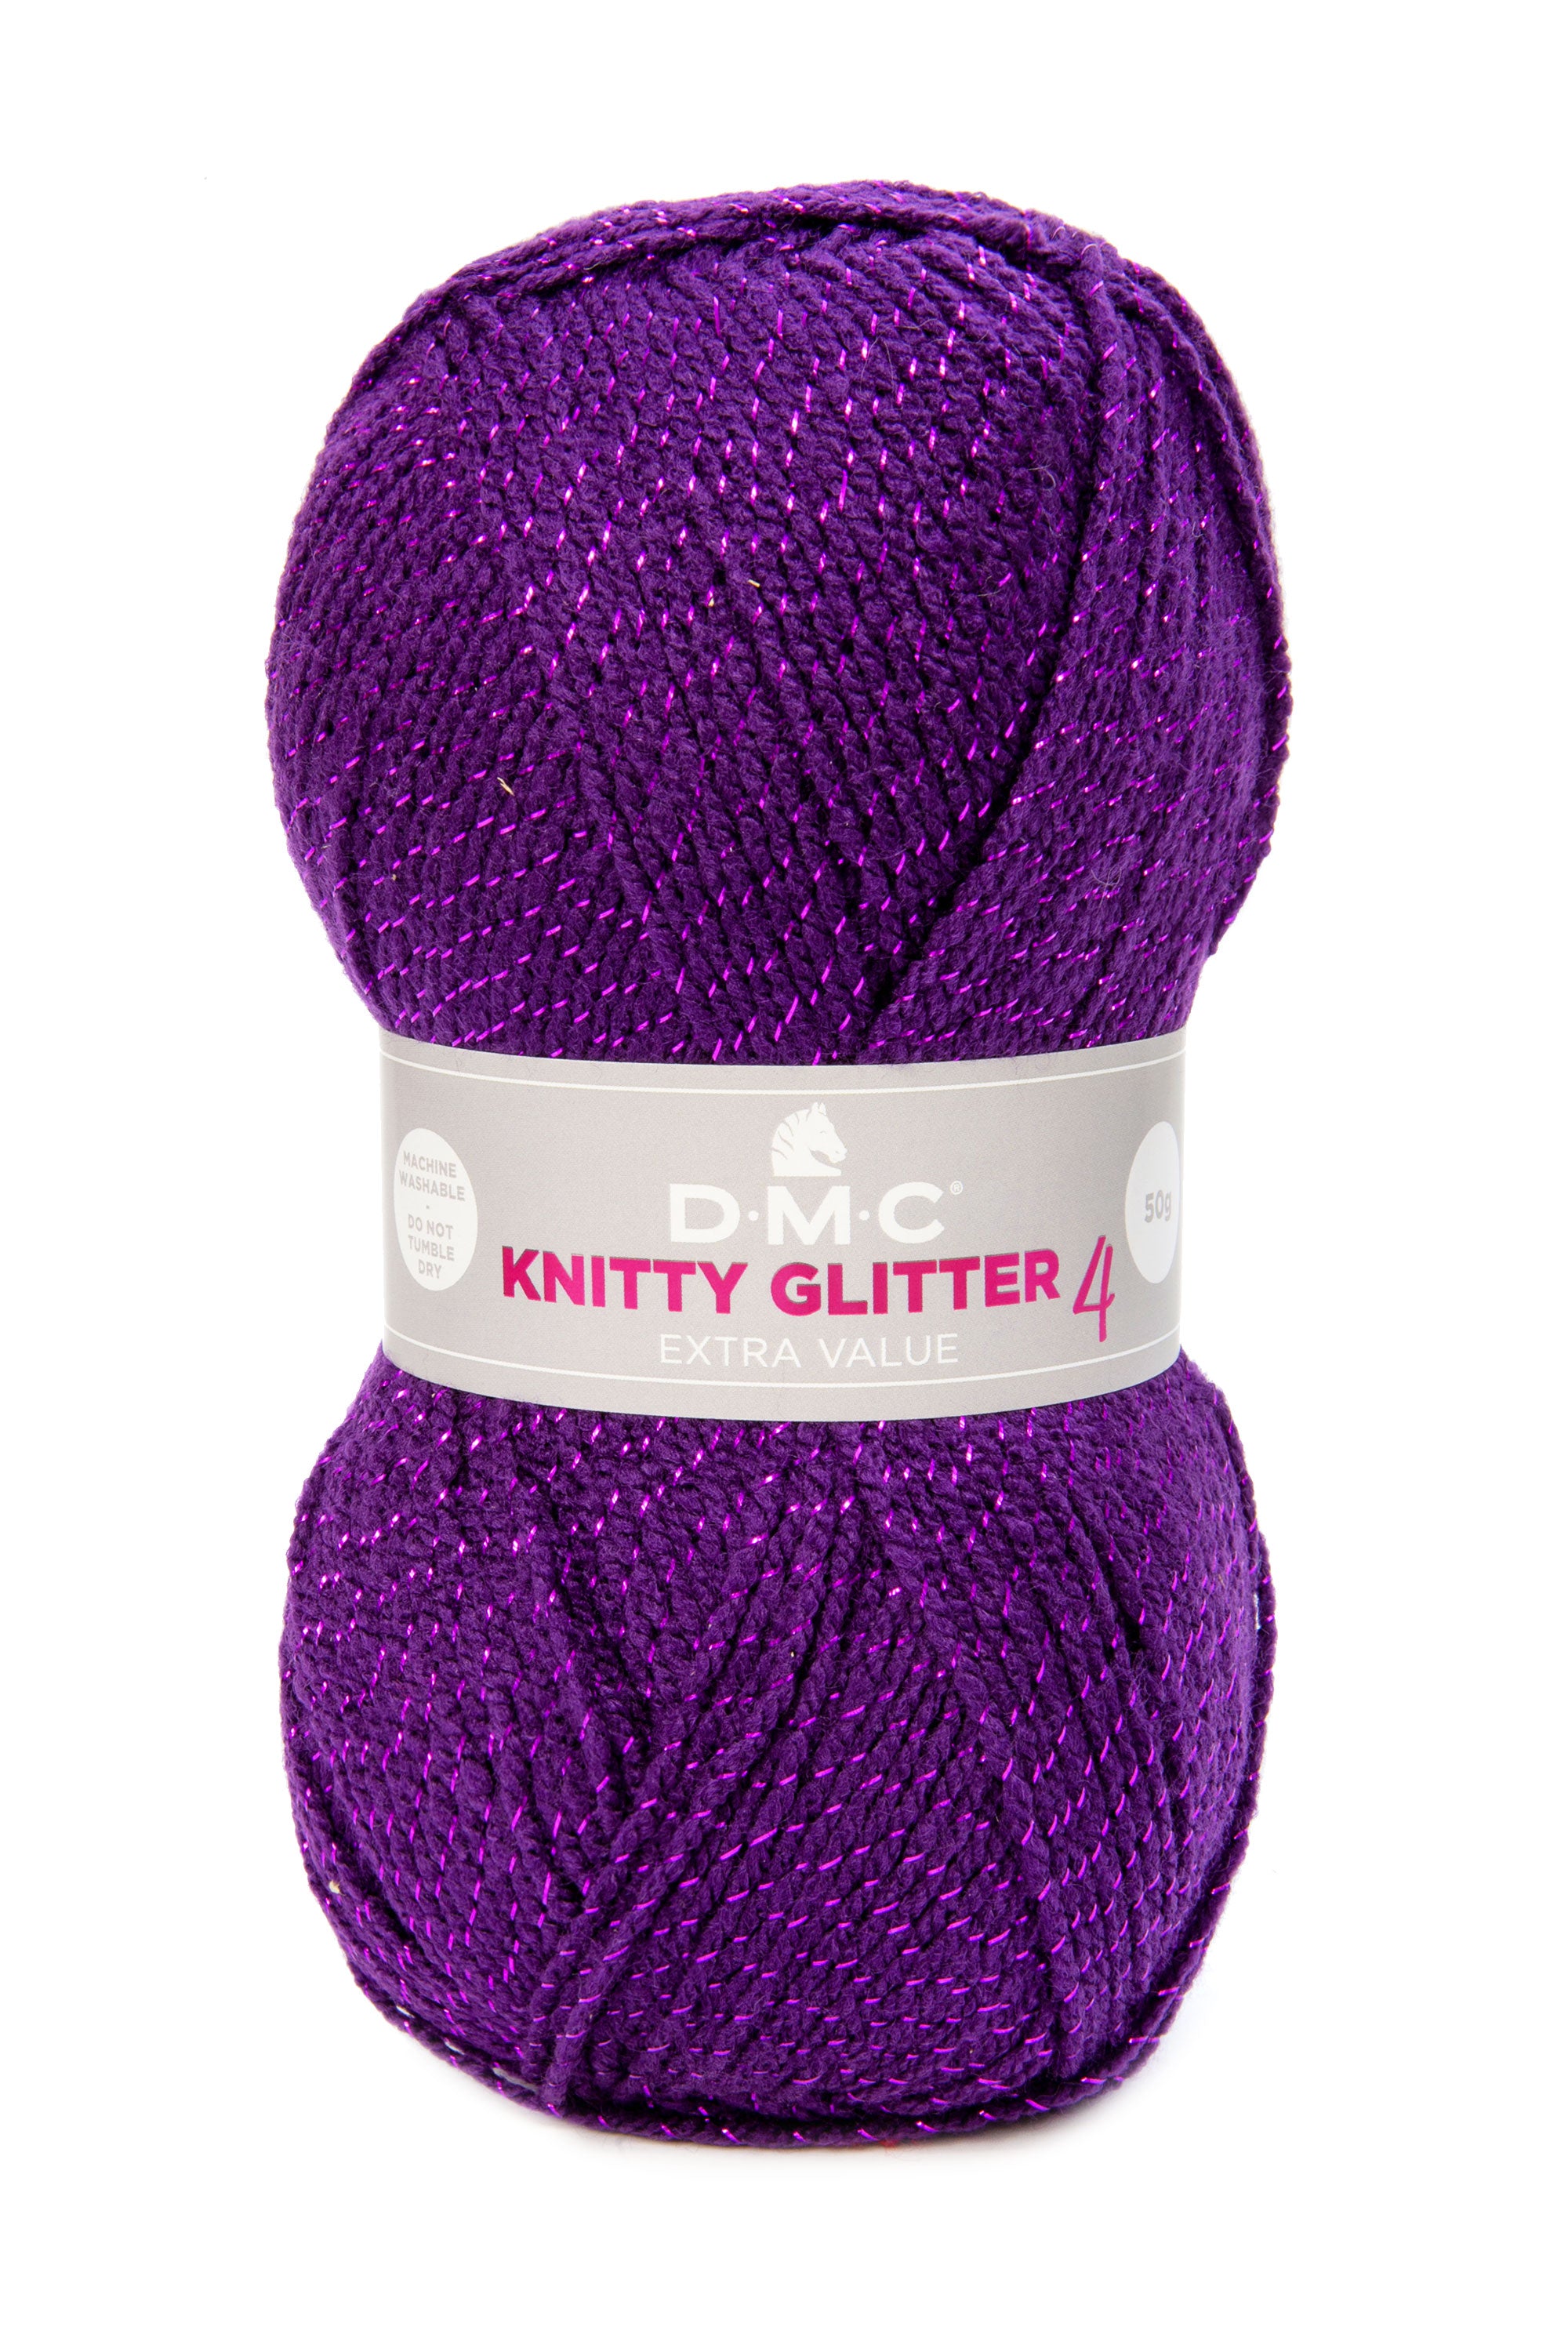 DMC KNITTY4 GLITTER - Glitter Effect Wool on your Garments